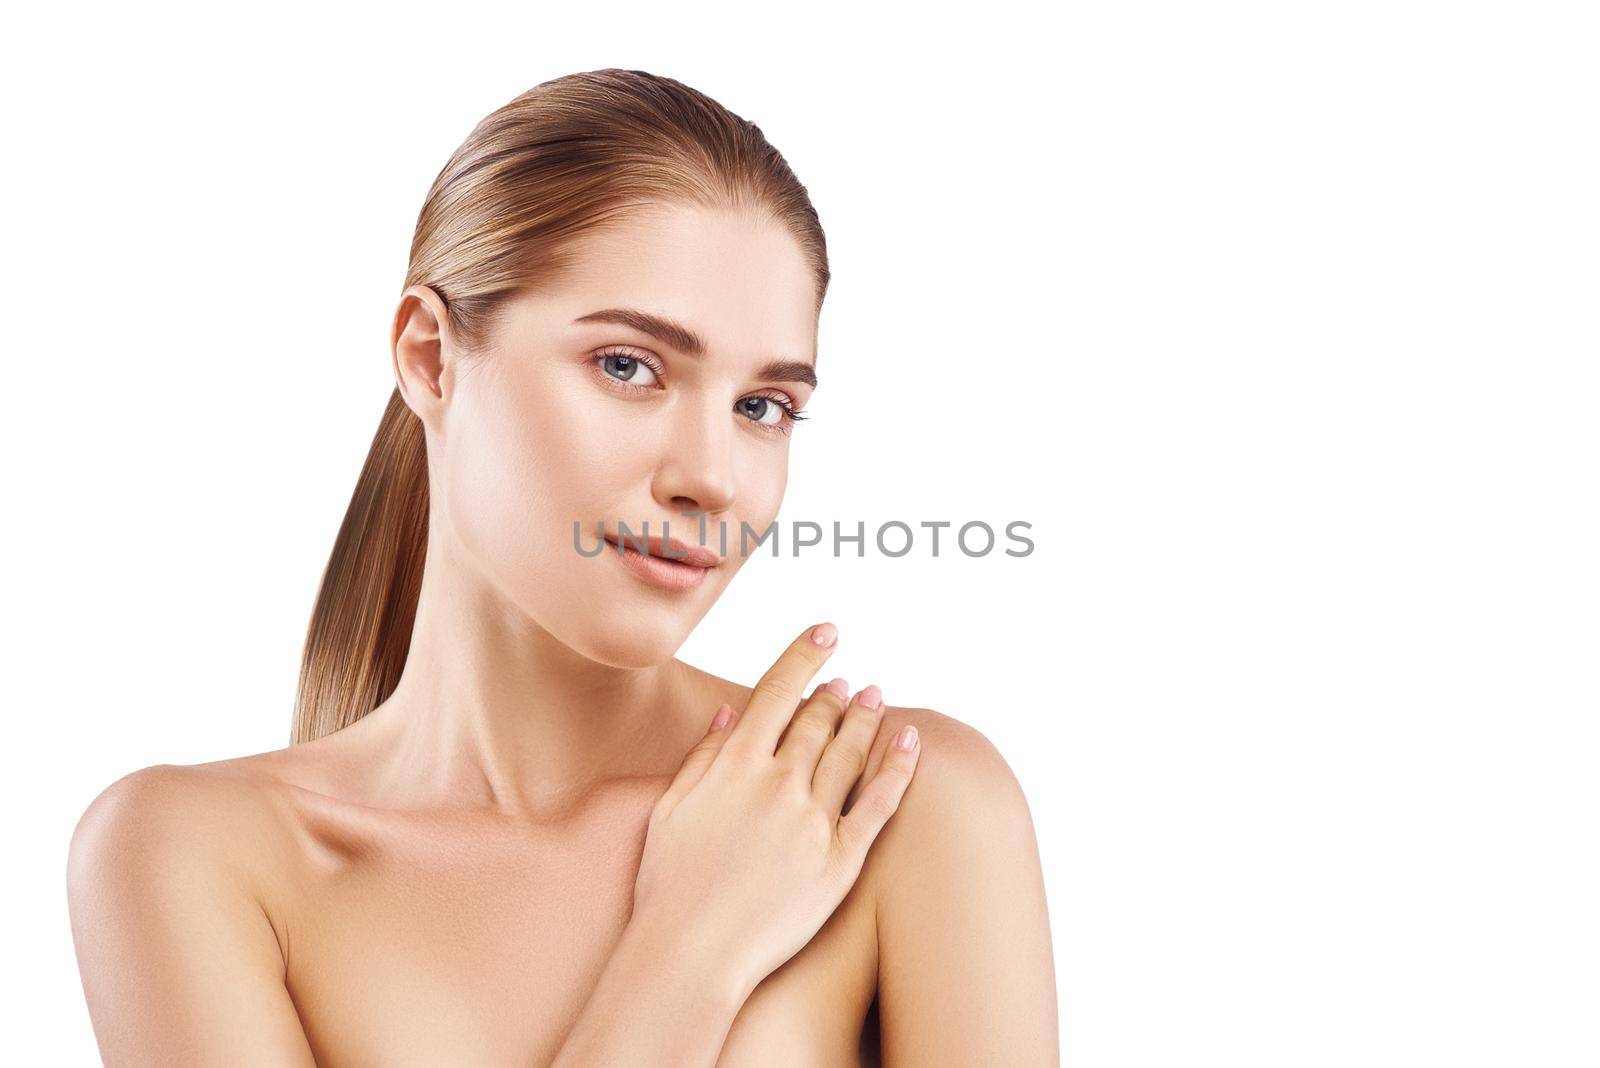 Beautiful woman face close up studio photo on white background. Light hair, grey eyes